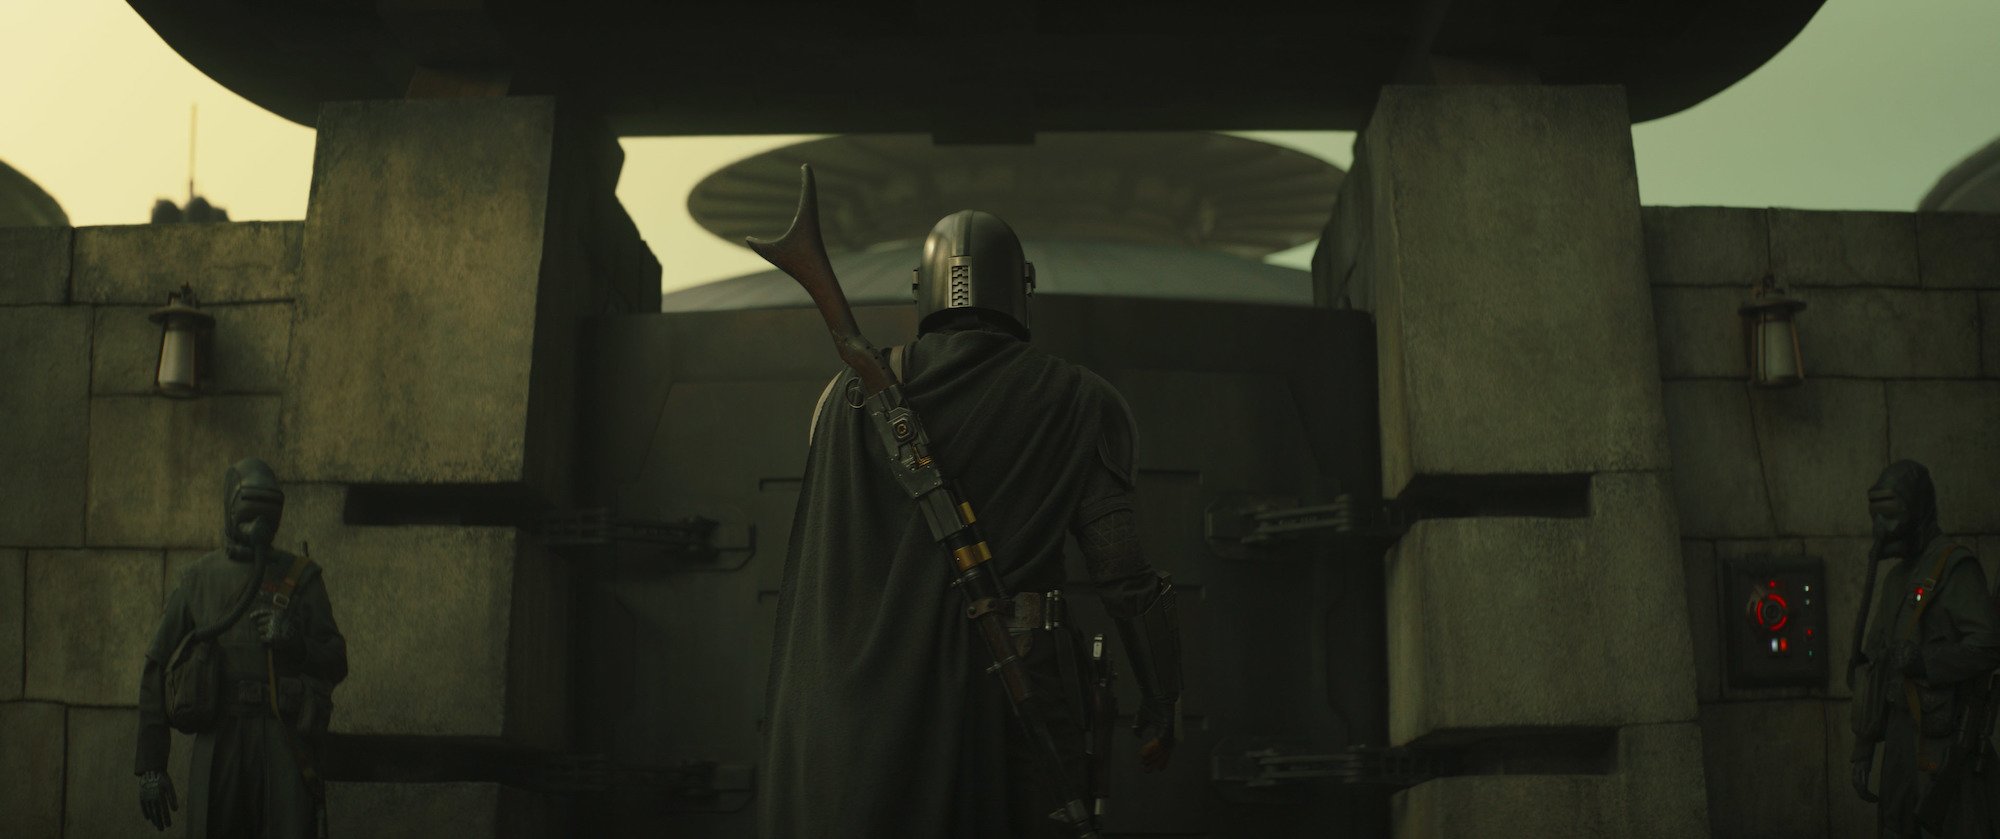 Mando on Corvus in 'The Mandalorian' "Chapter 13: The Jedi"